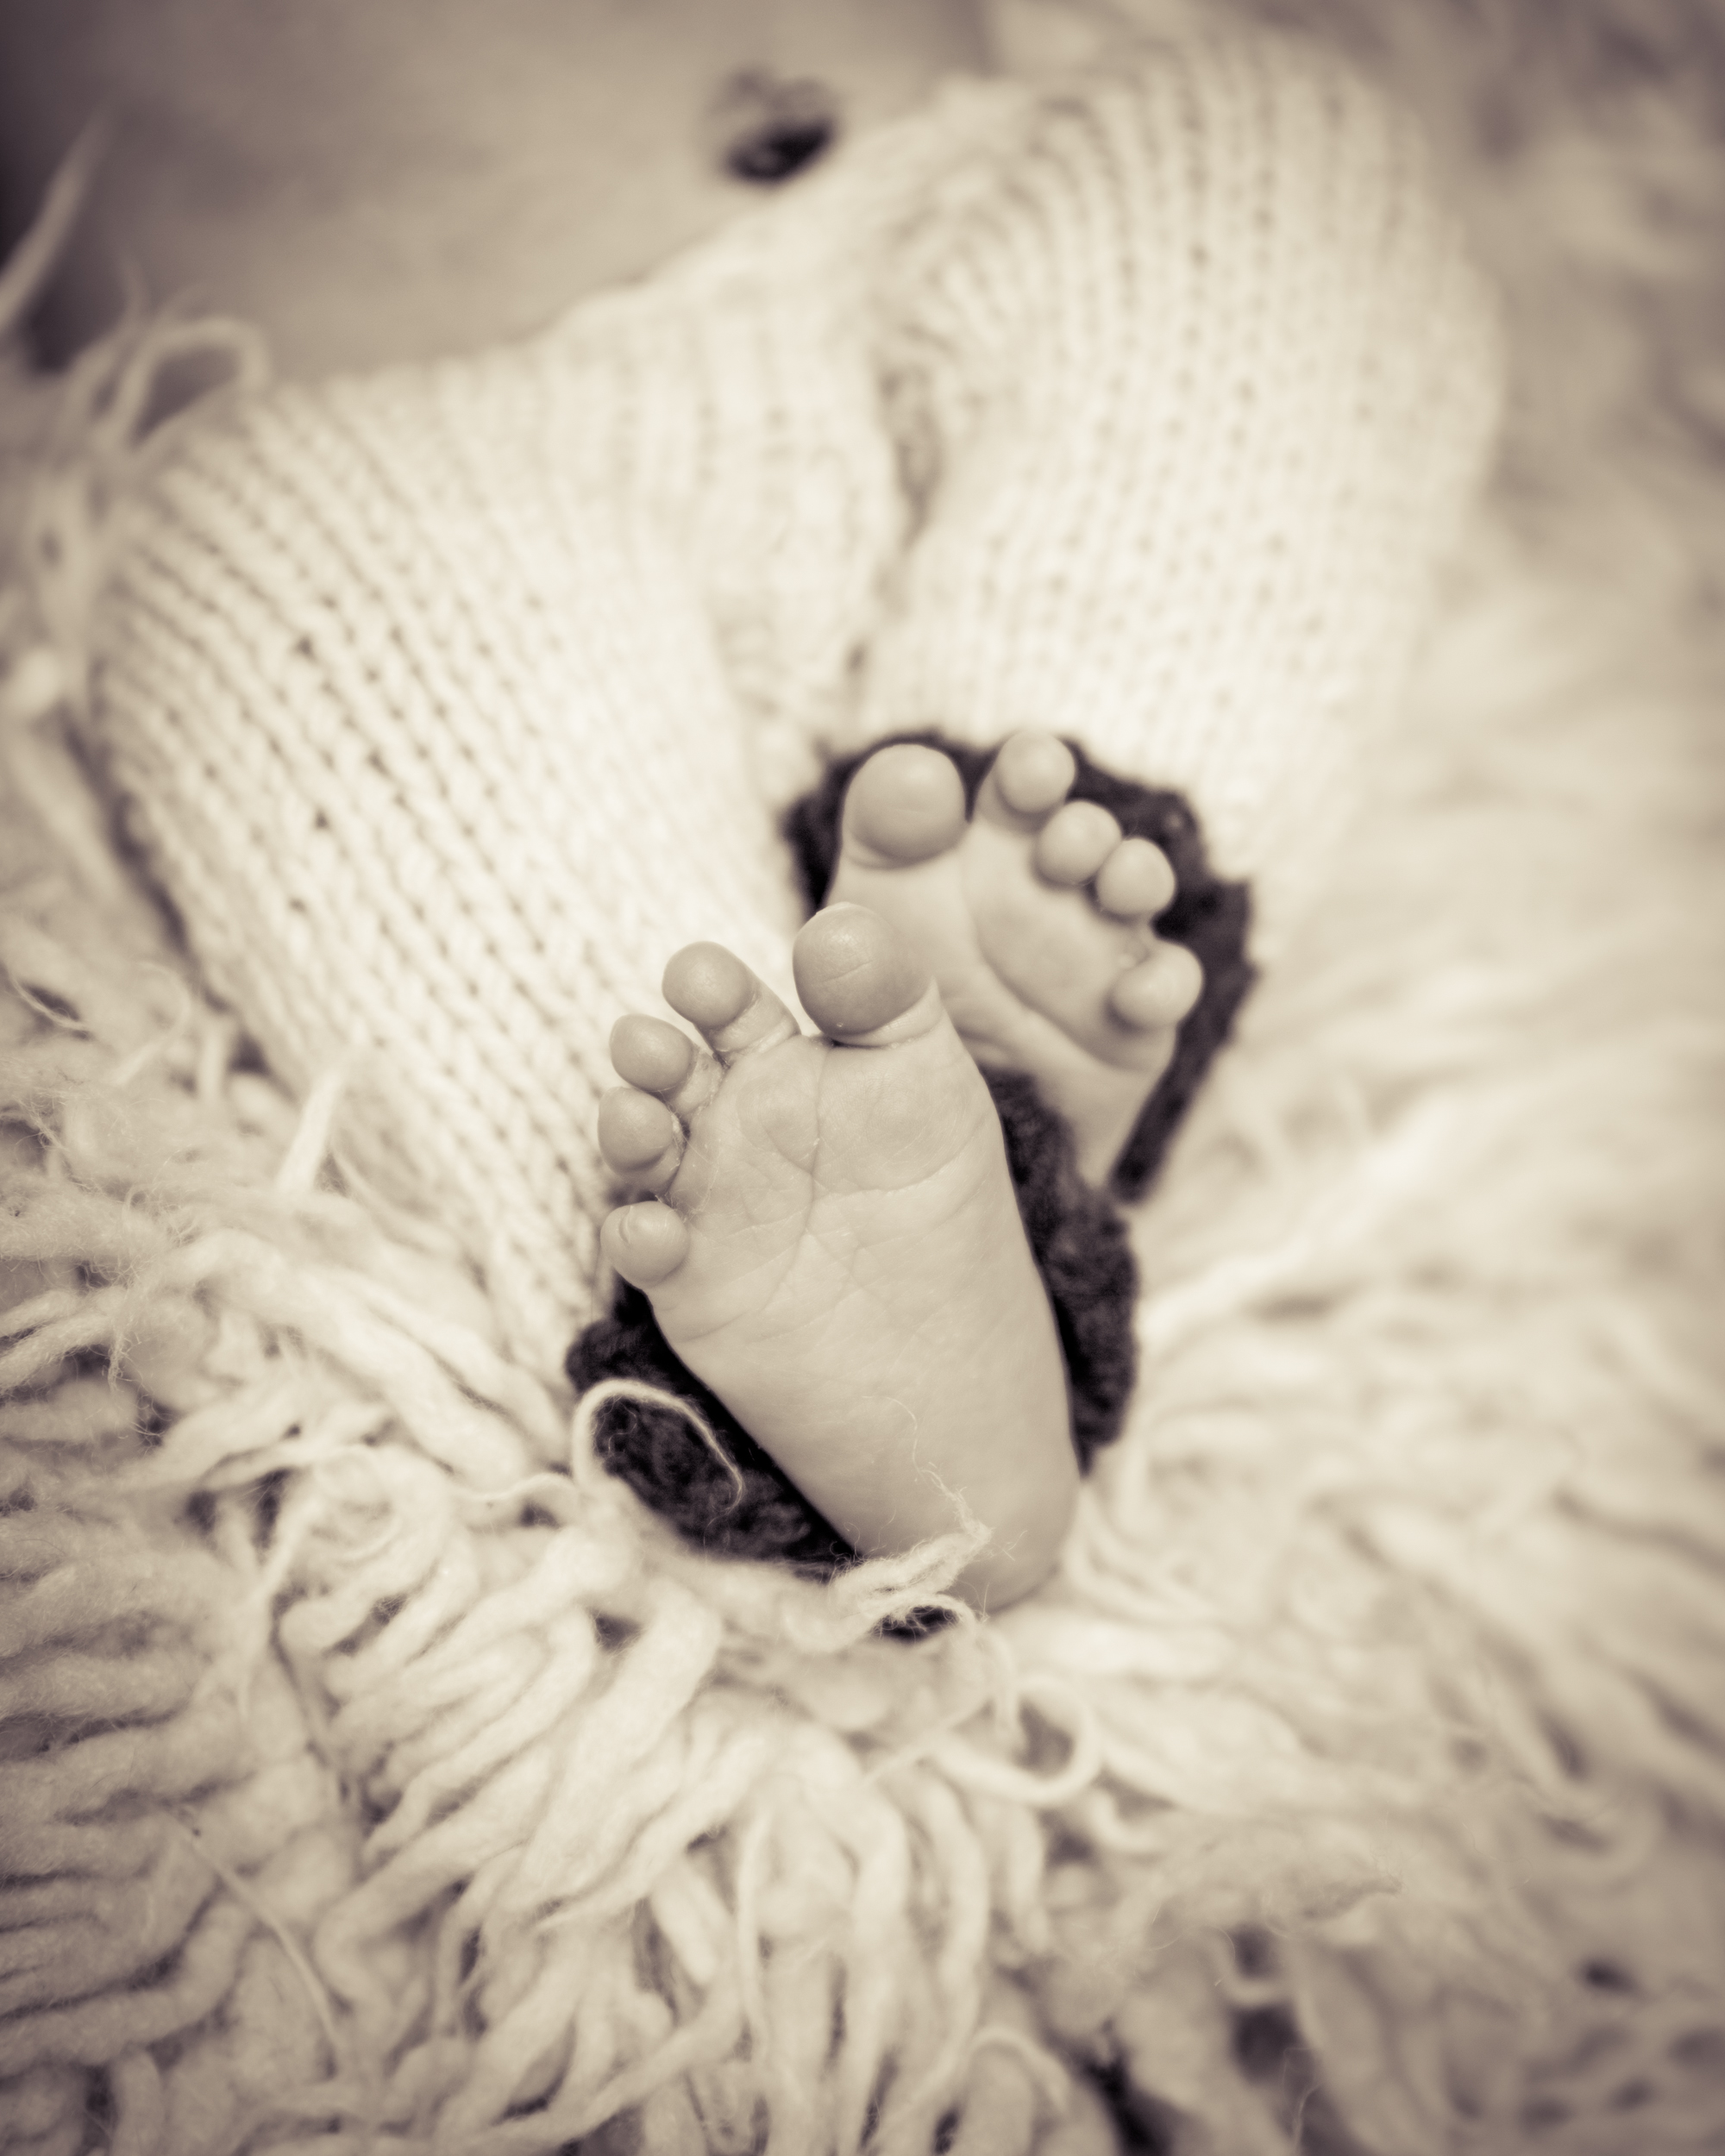 Portage_michigan_newborn_photographer:Monkey_feet